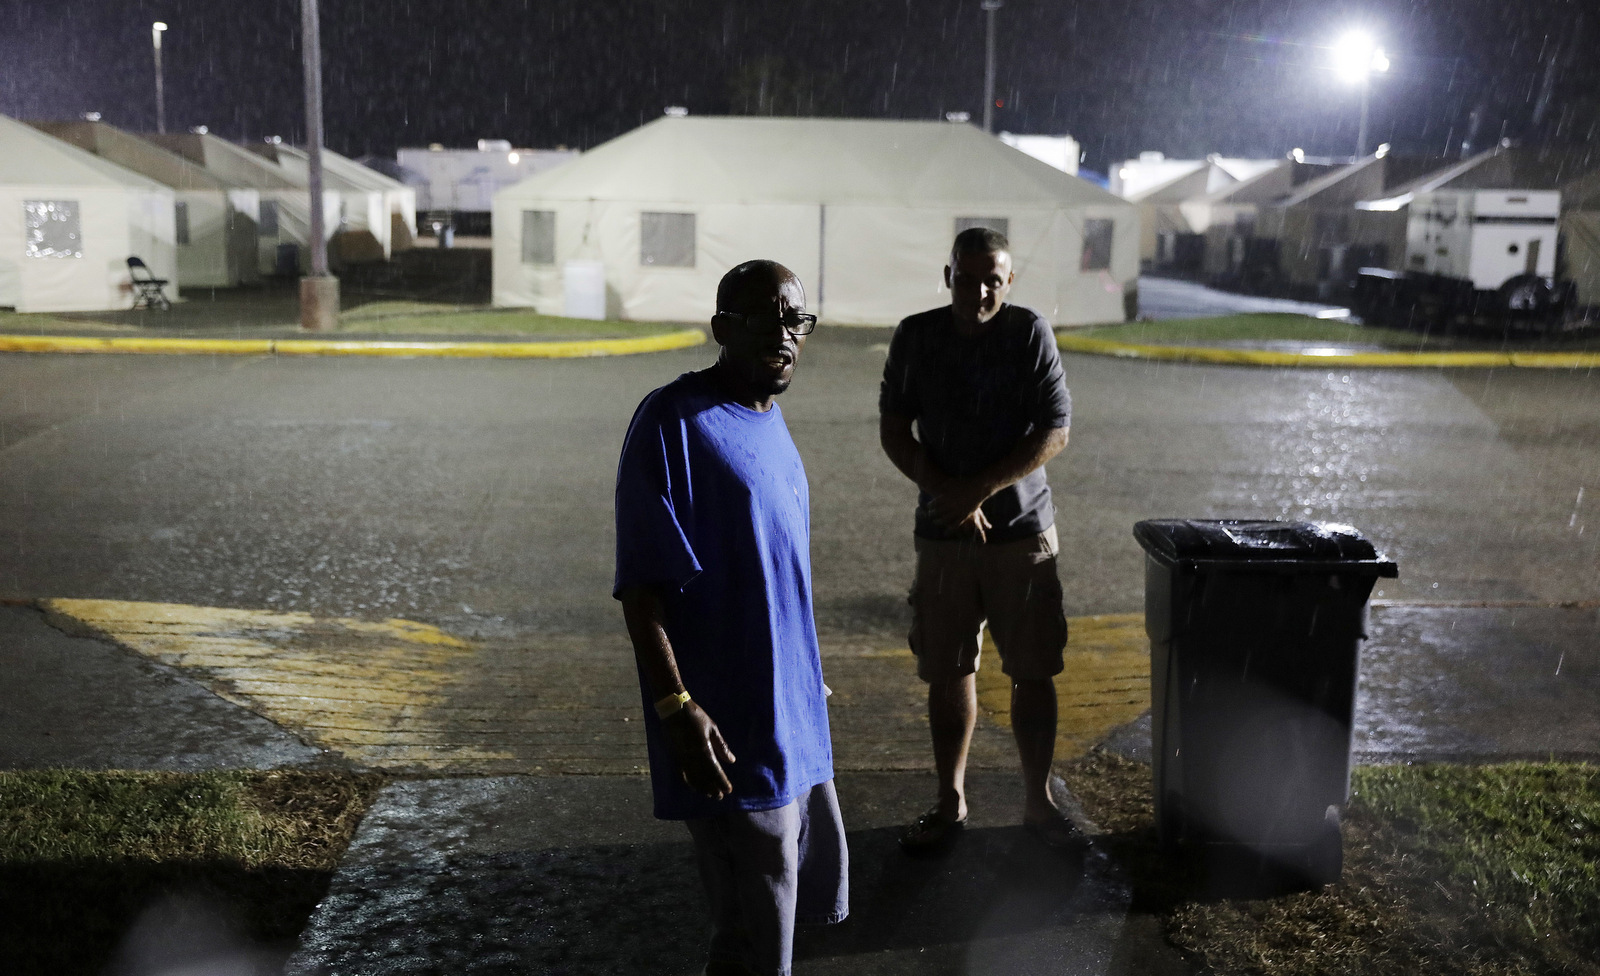 Arthur Shields, left, and a fellow evacuee walk through a temporary shelter encampment in Port Arthur, Texas where they've been living since hurricane Harvey damaged their homes. (AP/David Goldman)